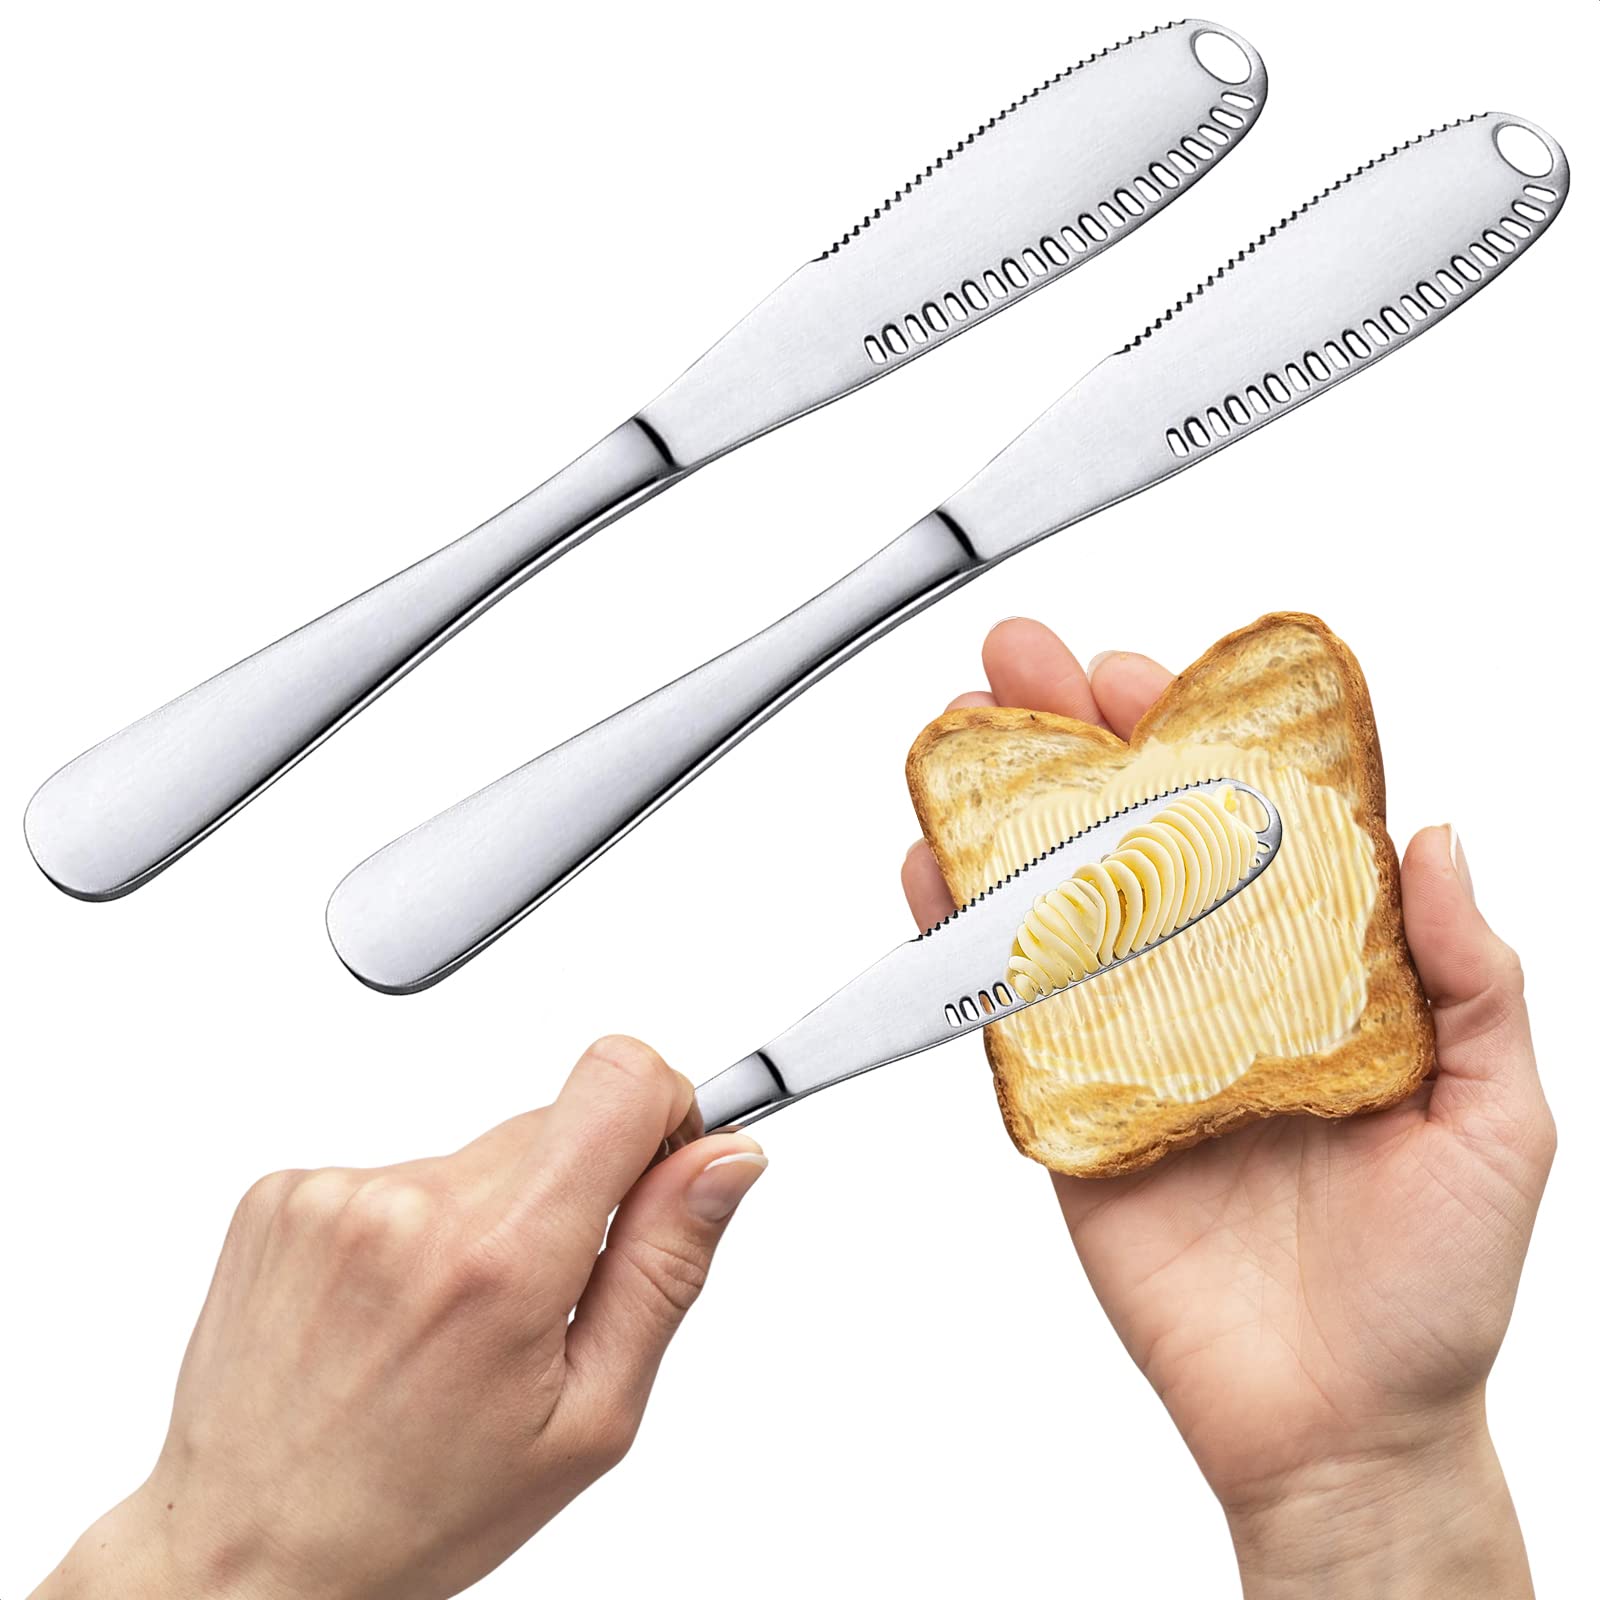 Stainless steel butter knife spreader